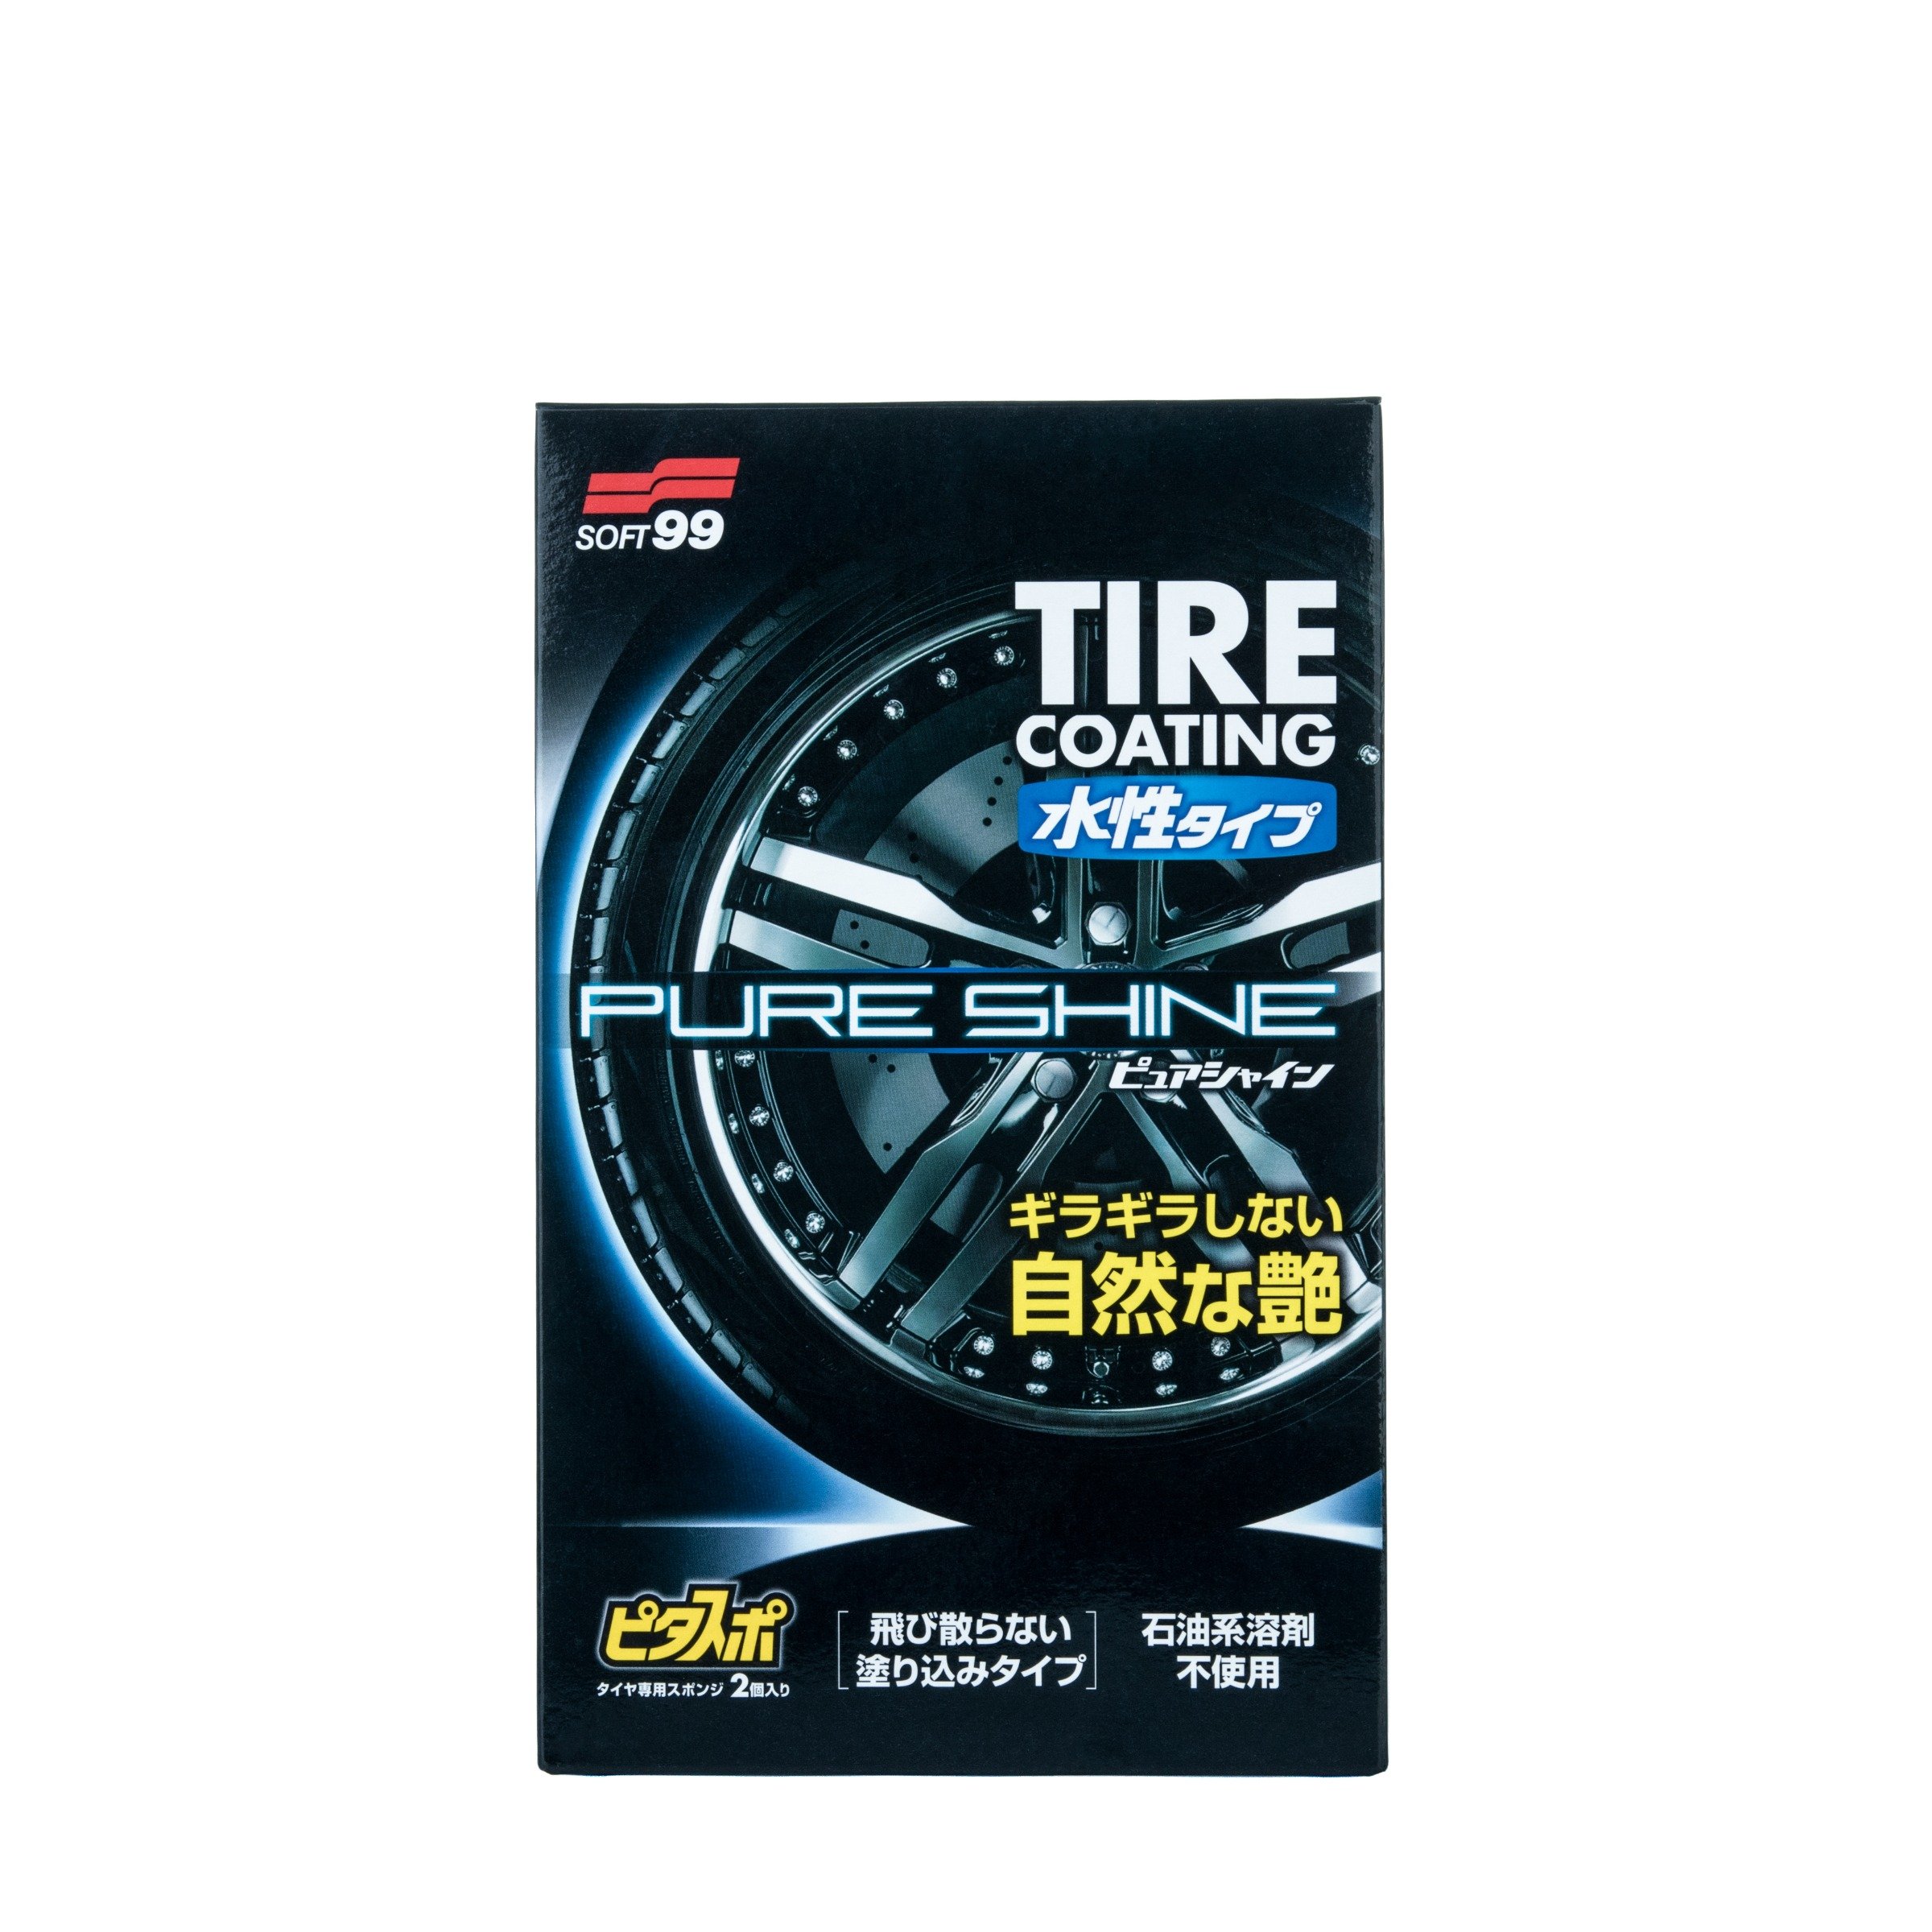 Pure-Shine Tire Coating Kit - 100ml